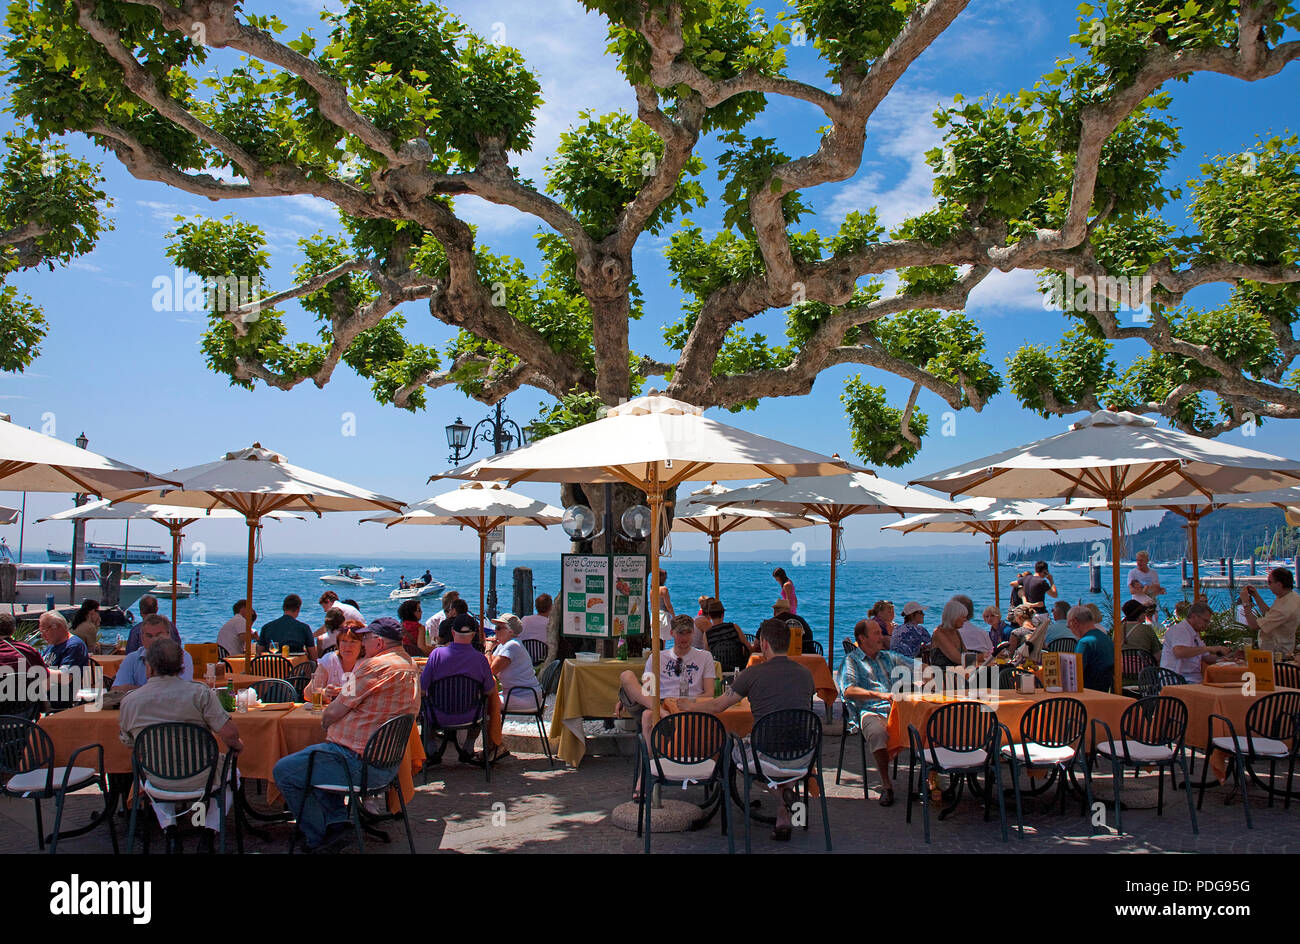 People in a Cafe at lake promenade, Garda, province Verona, Lake Garda, Italy Stock Photo